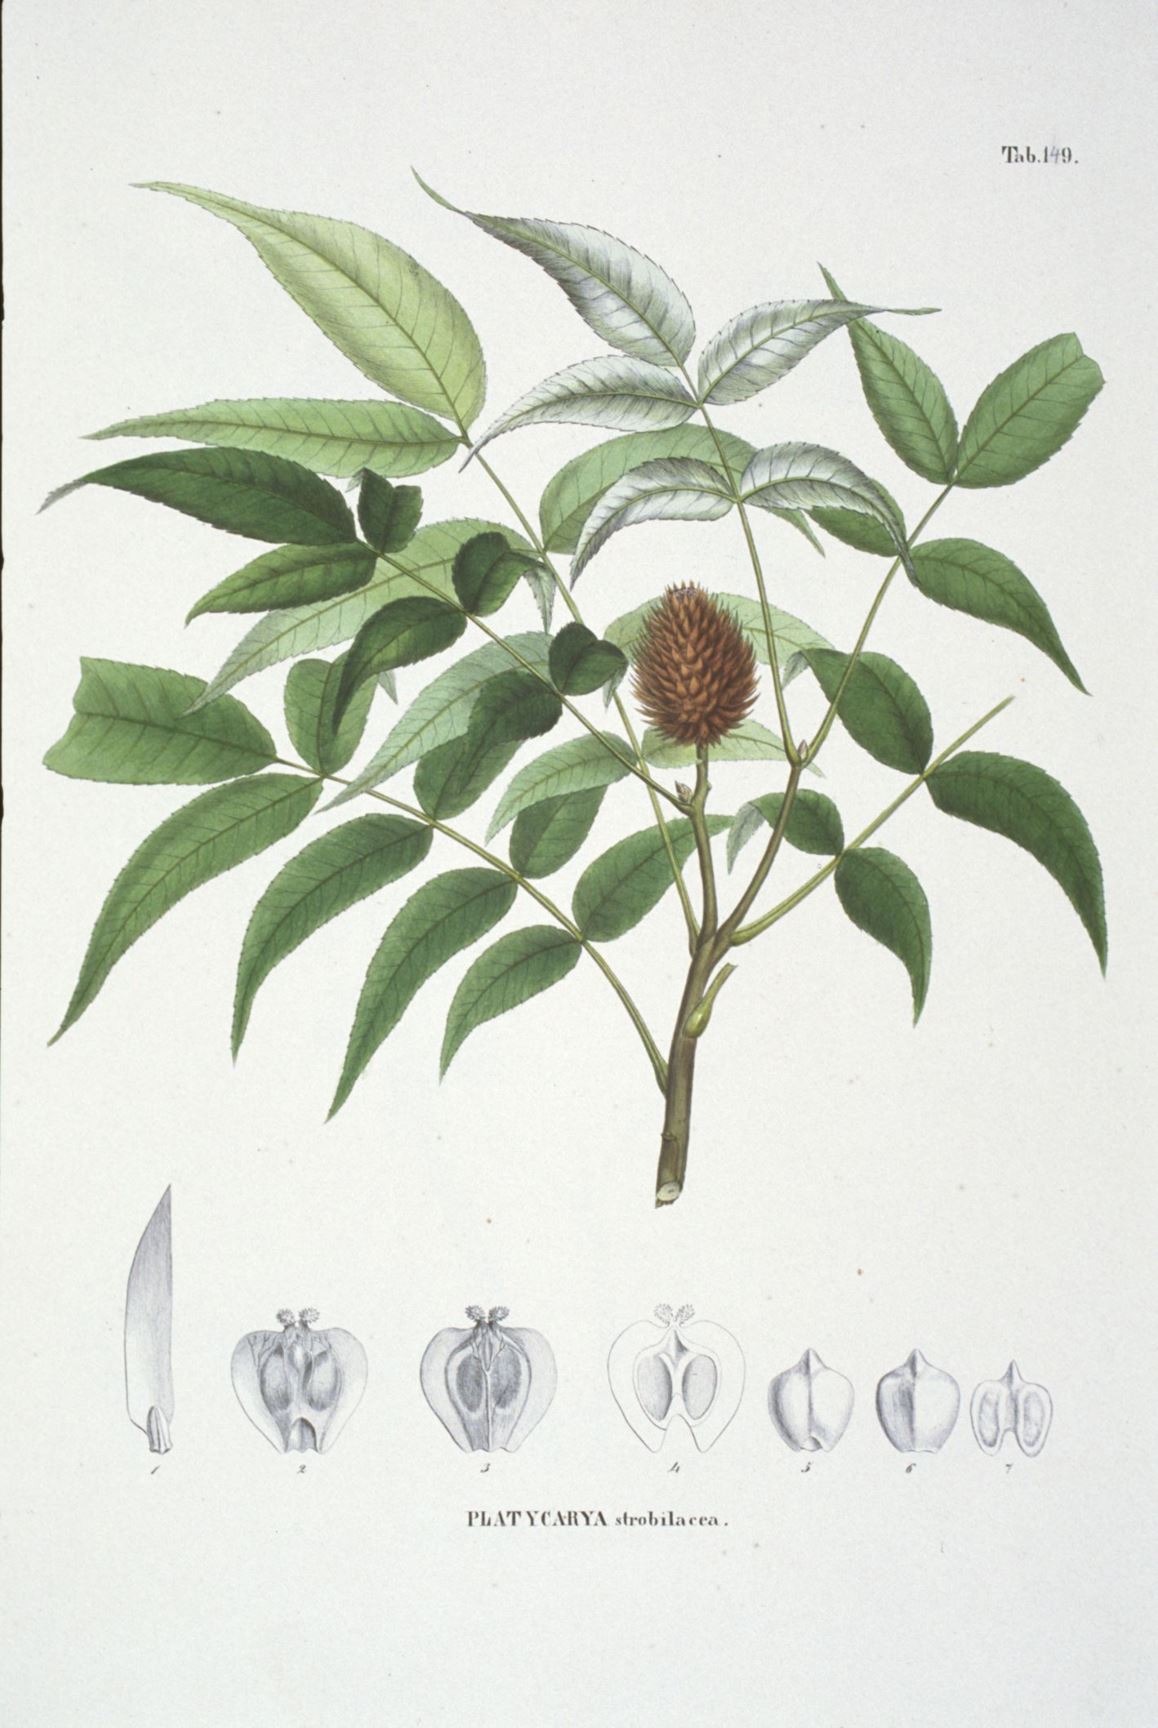 Platycarya strobilacea - platycarya, ノグルミ nogurumi, 化香树 hua xiang shu, 털굴피나무 teol gul pi na mu